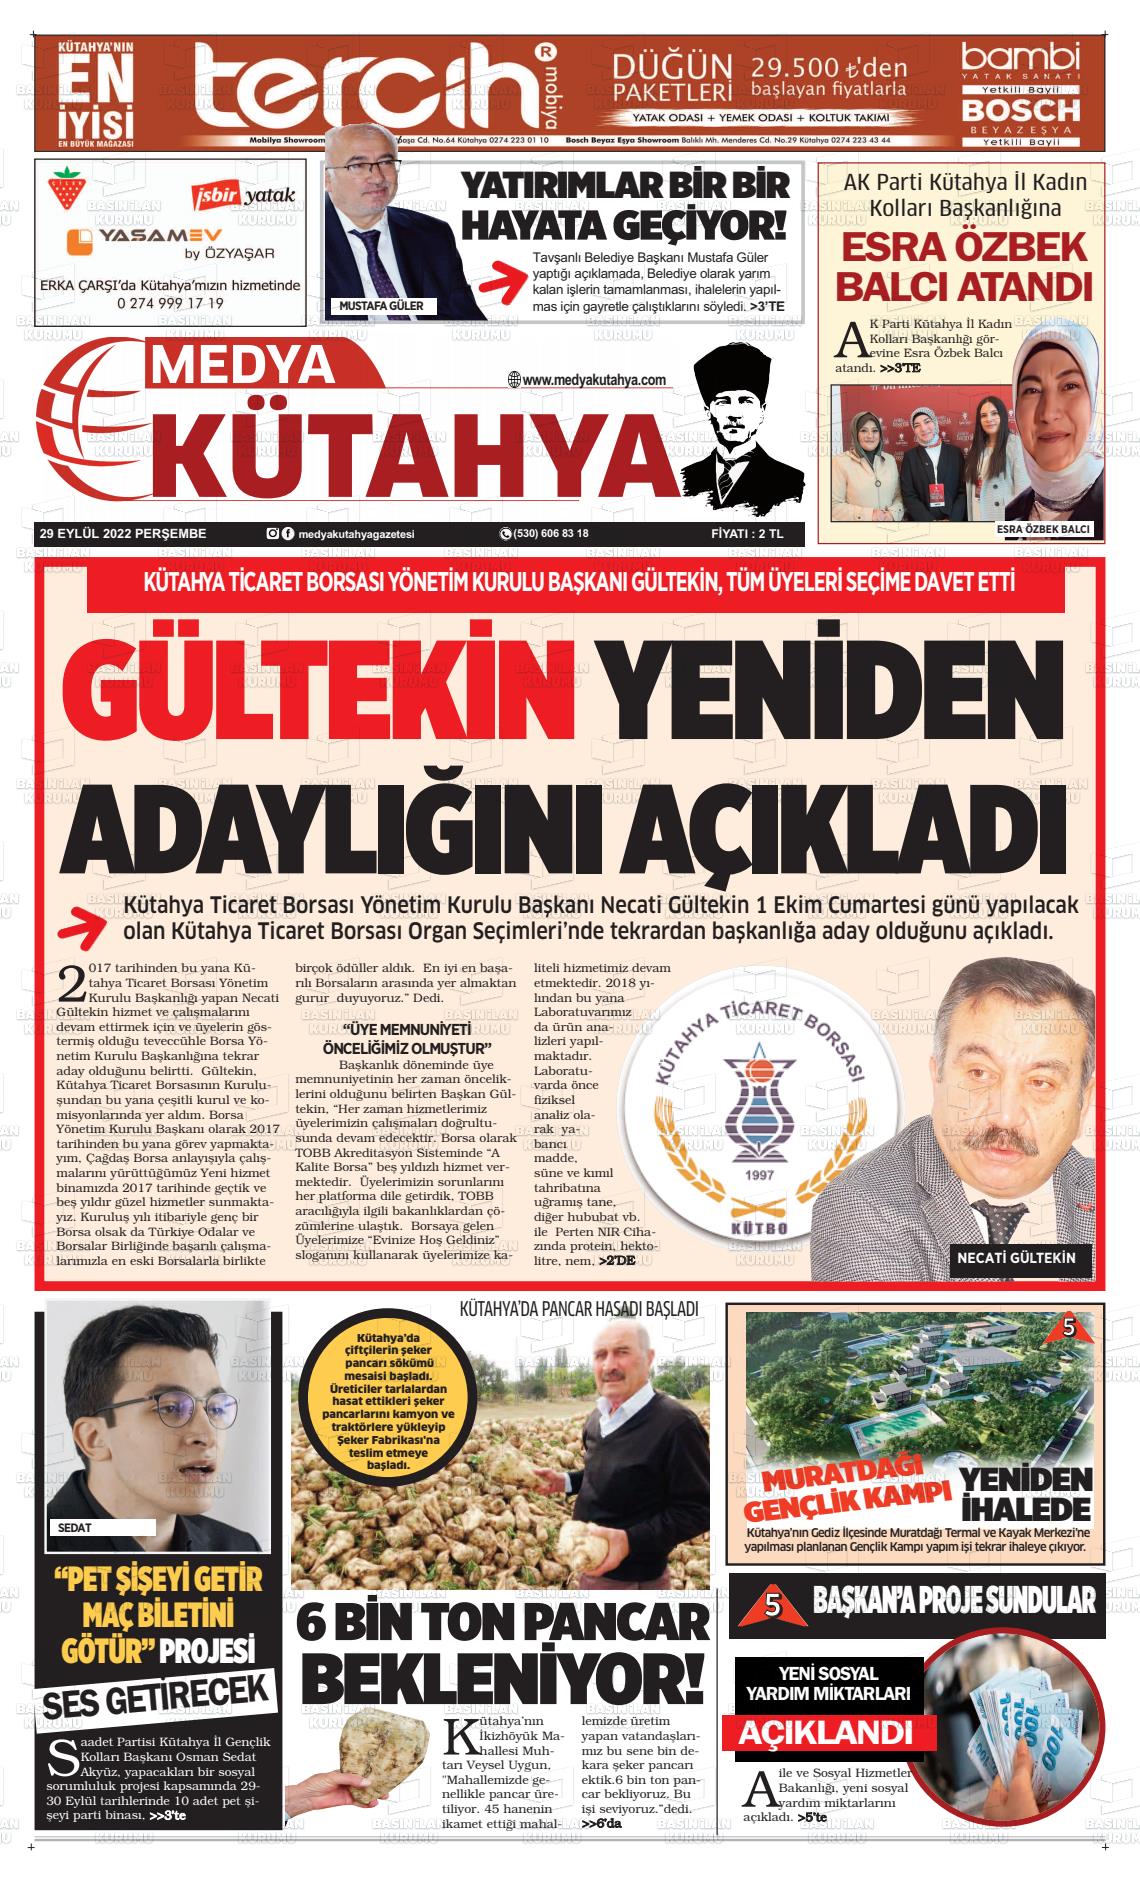 29 Eylül 2022 Medya Kütahya Gazete Manşeti